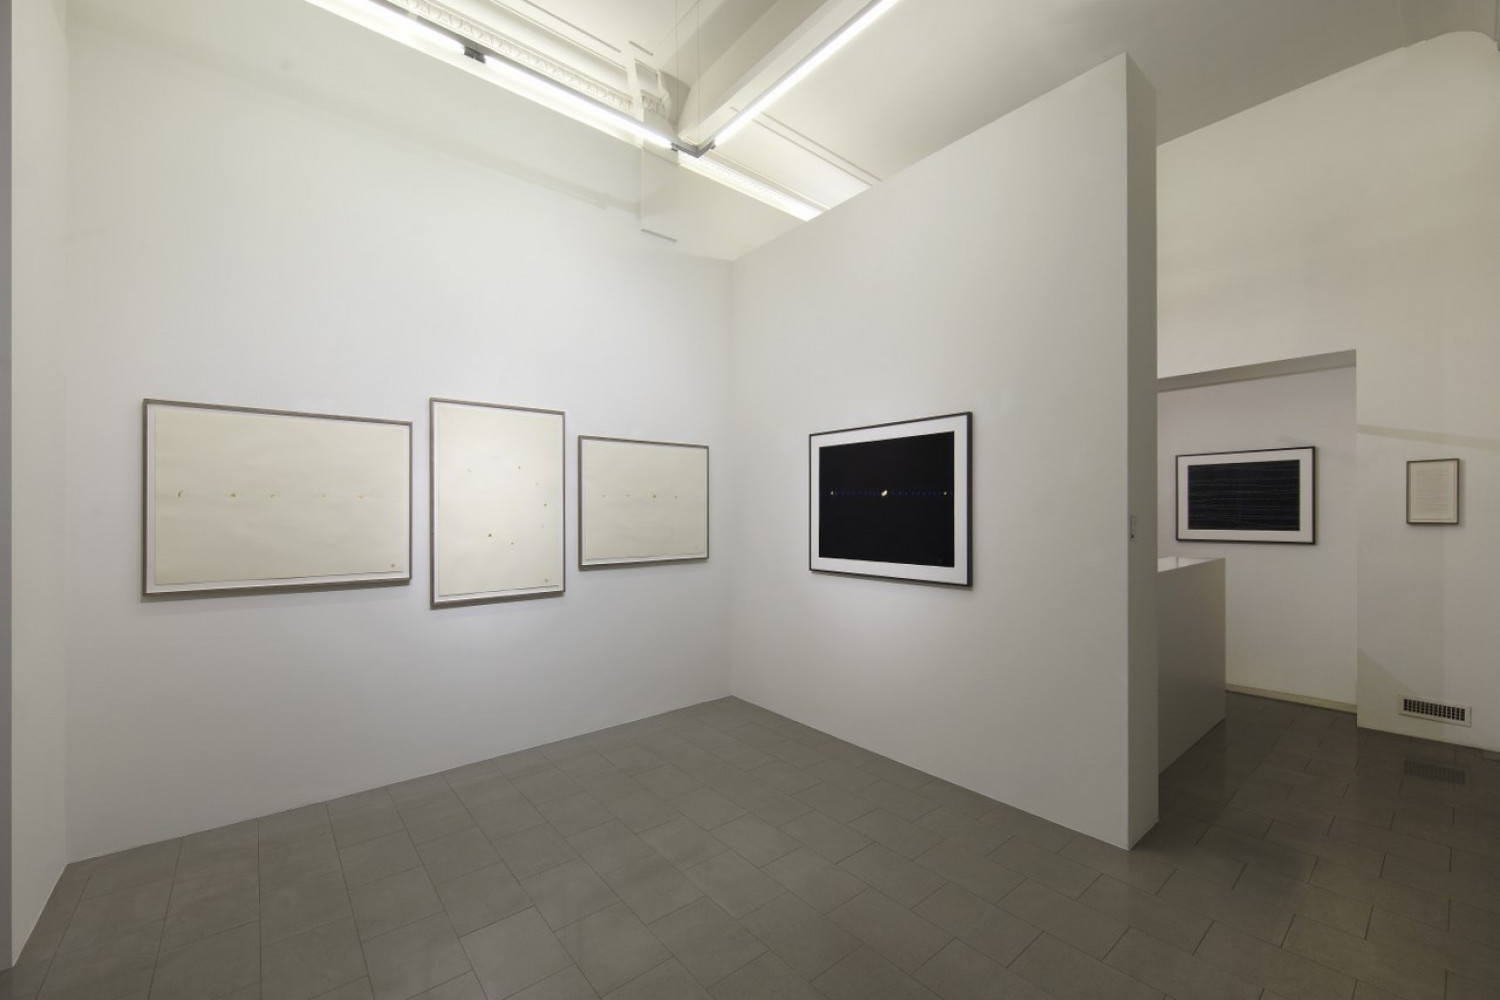 Tatsuo Miyajima, Installation view, Buchmann Lugano, 2019